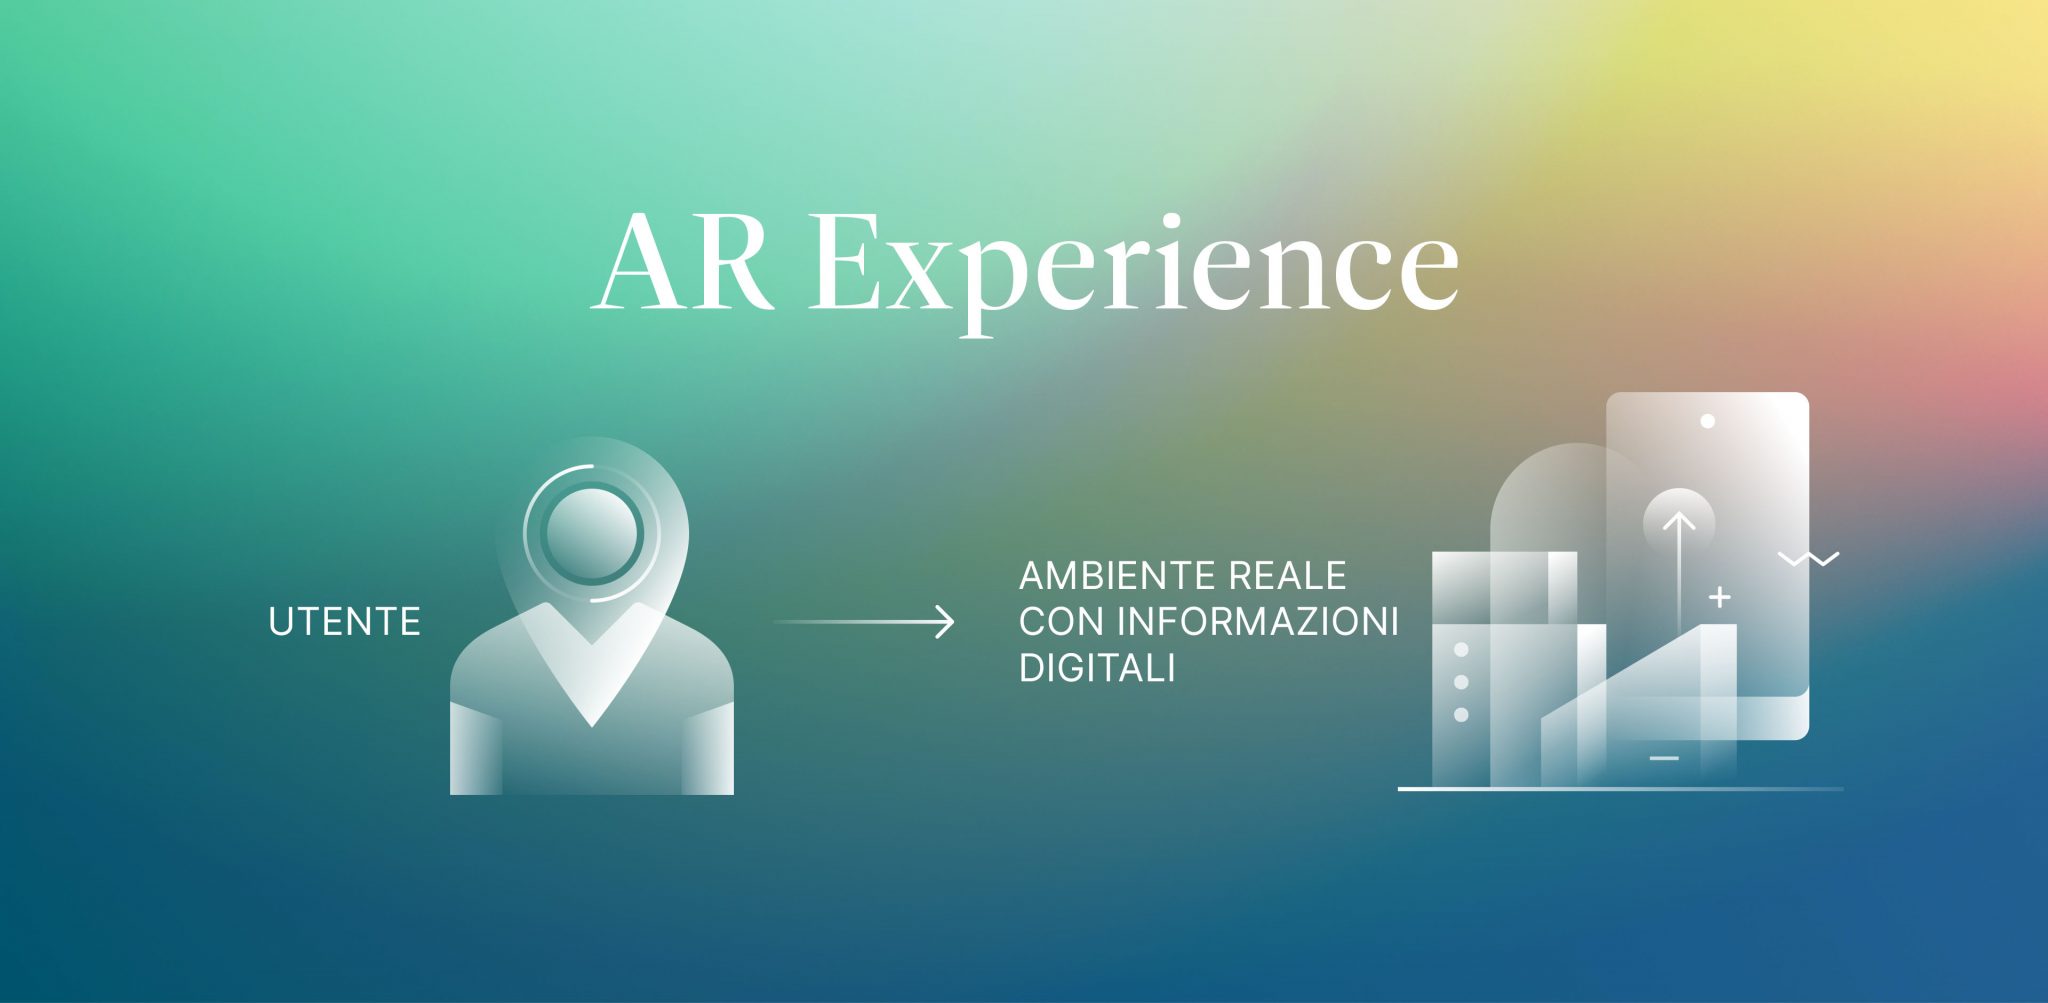 augmented reality experience KeyWe